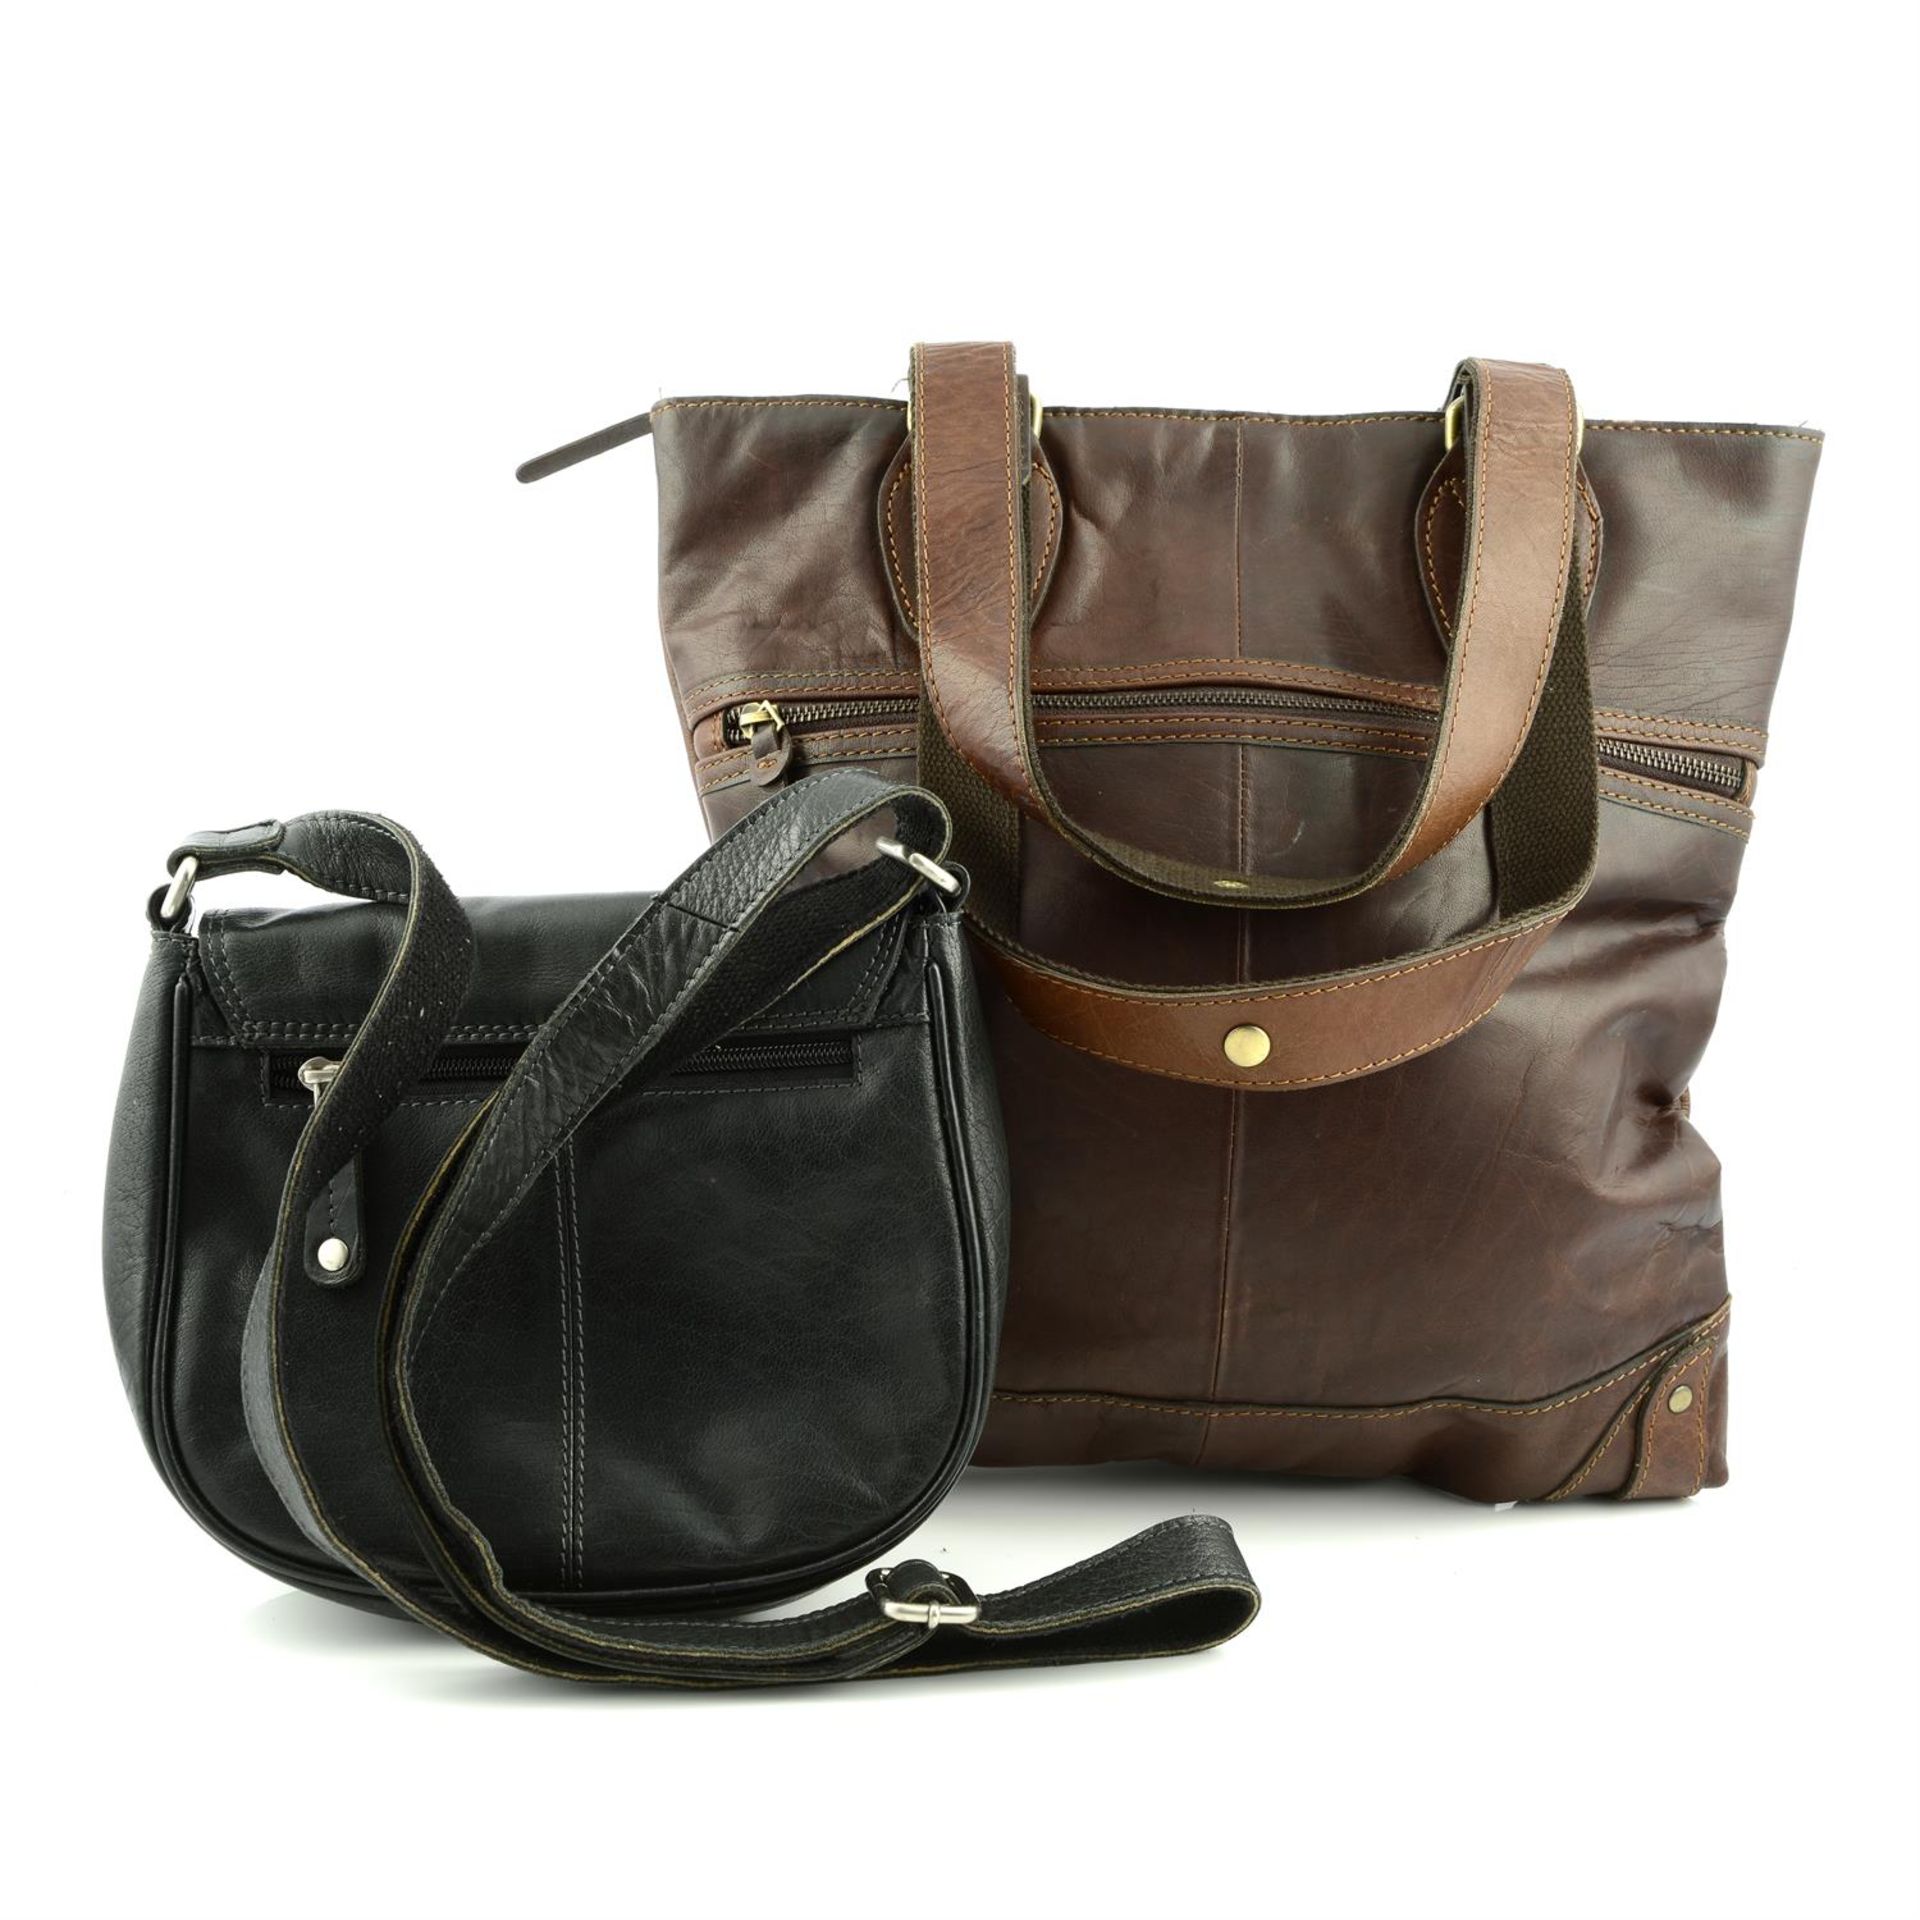 BOLLA - two handbags. - Image 2 of 3